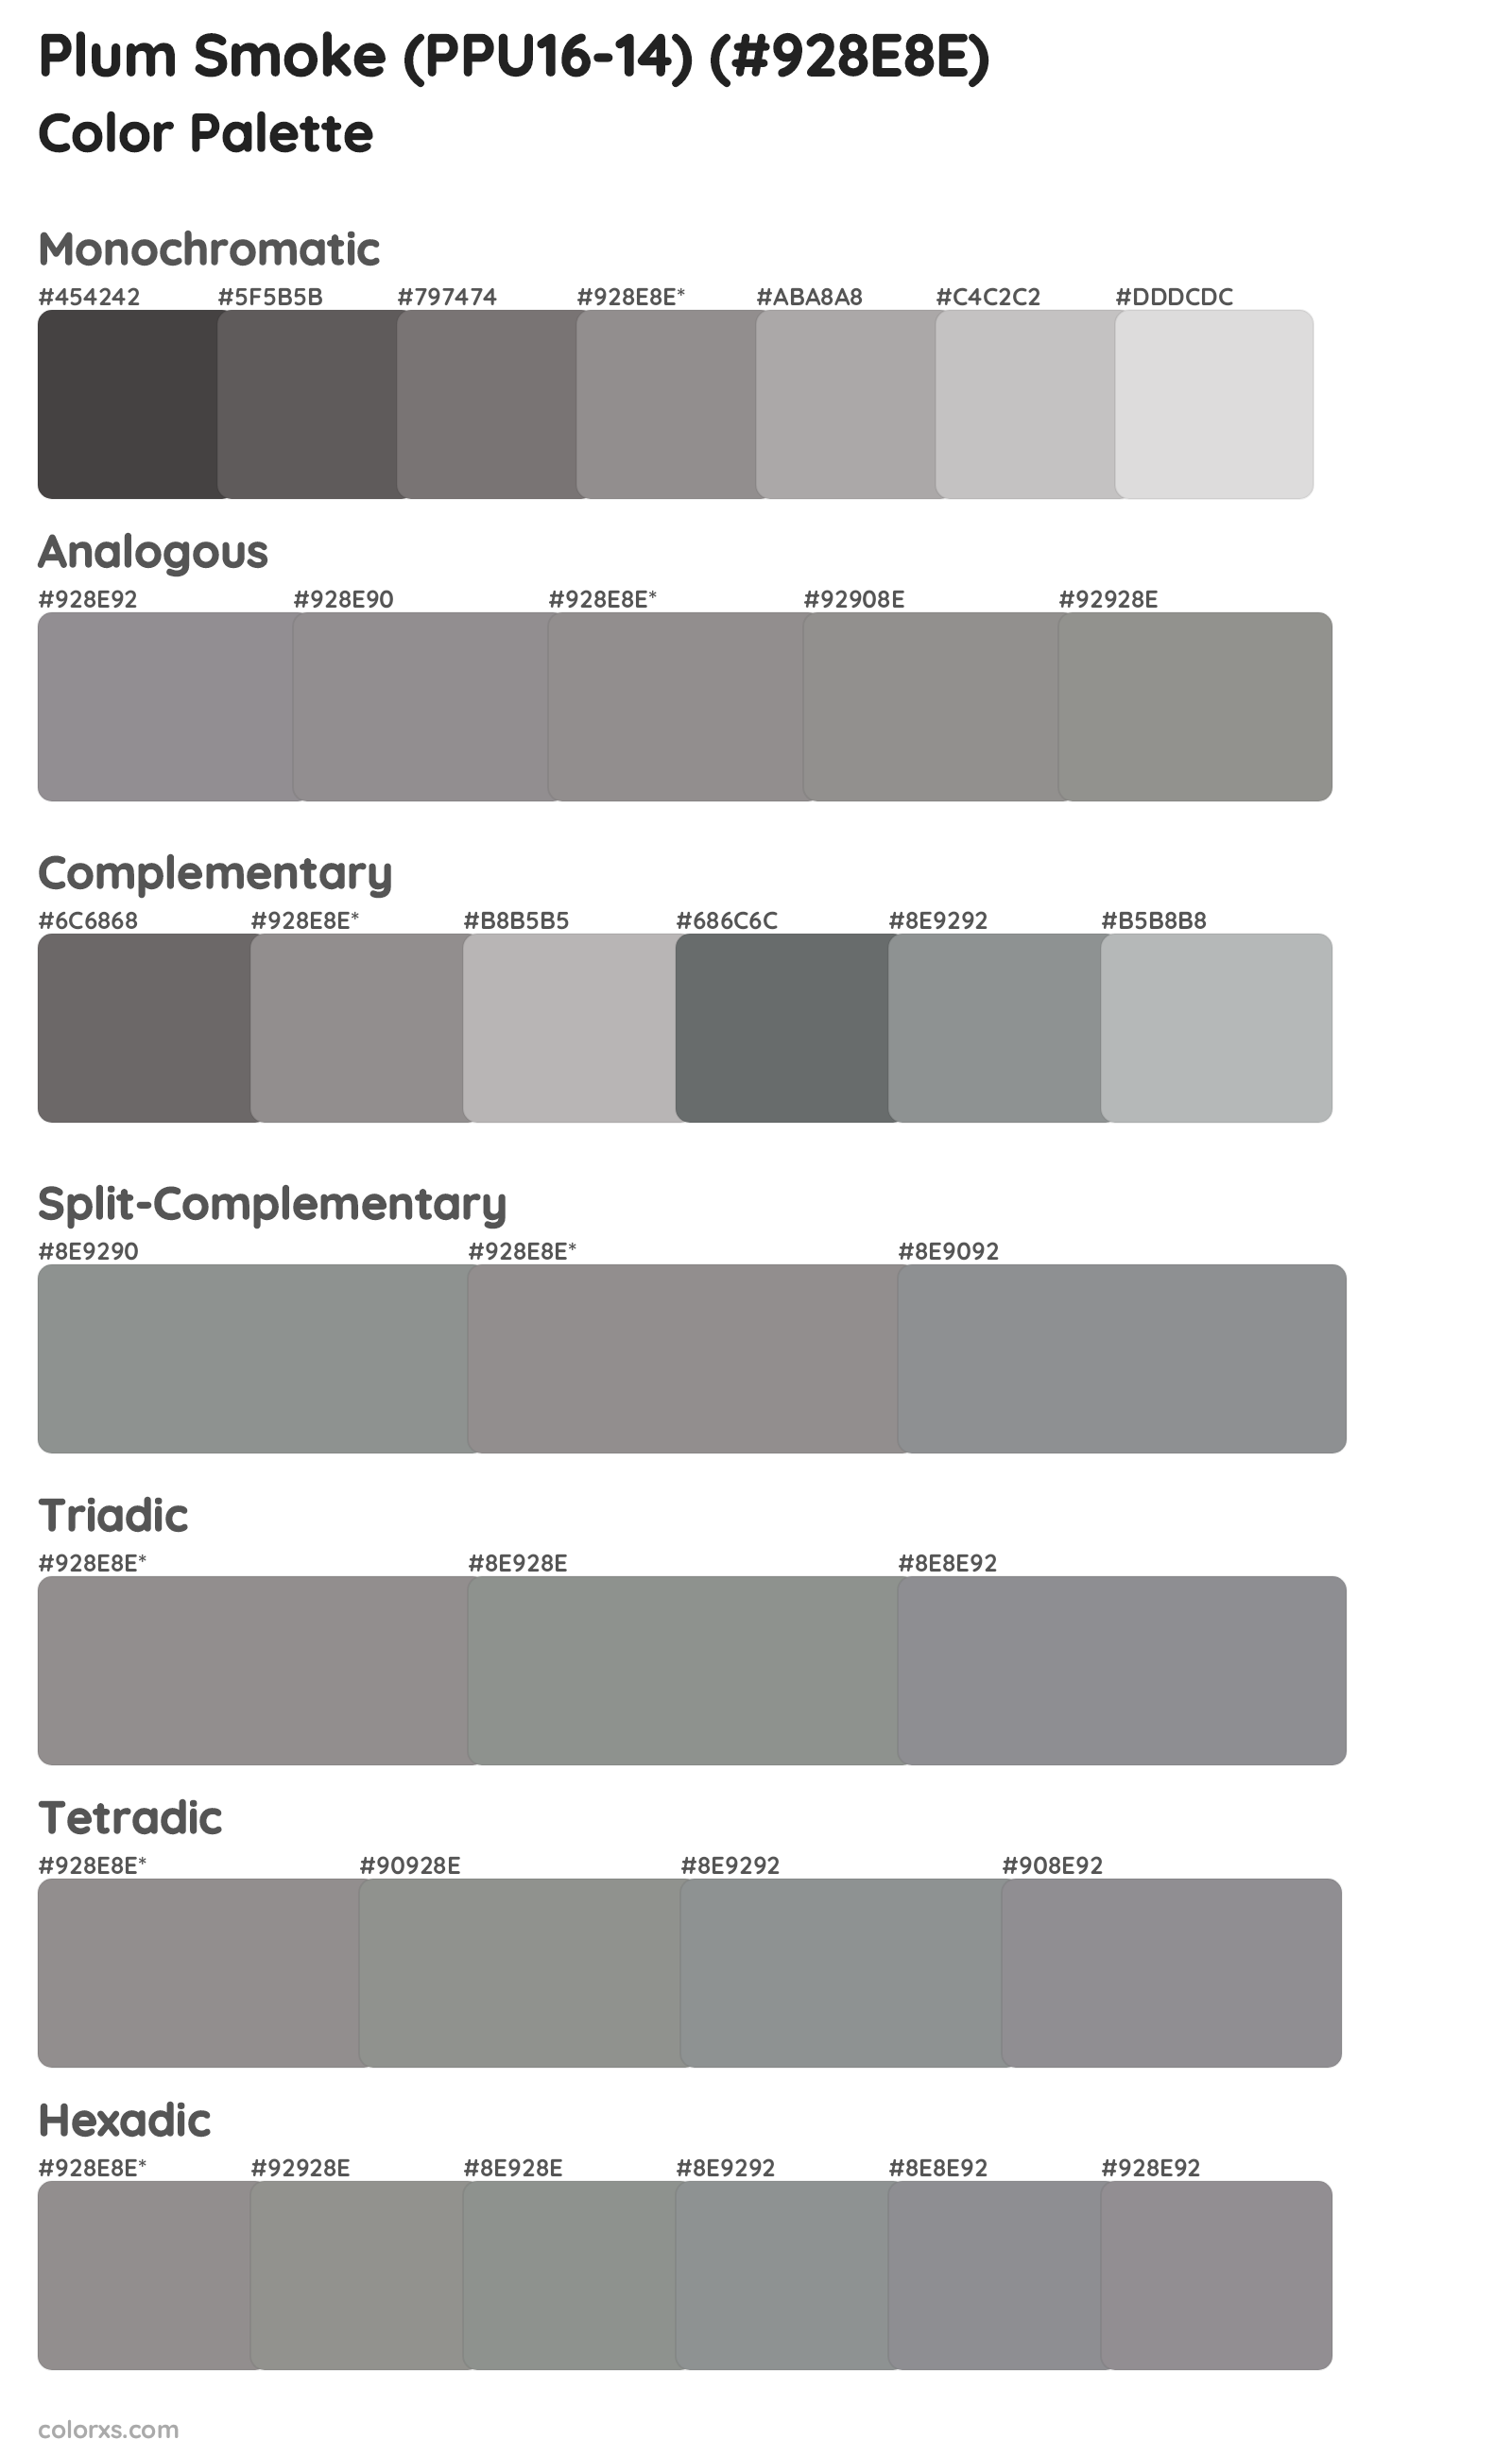 Plum Smoke (PPU16-14) Color Scheme Palettes